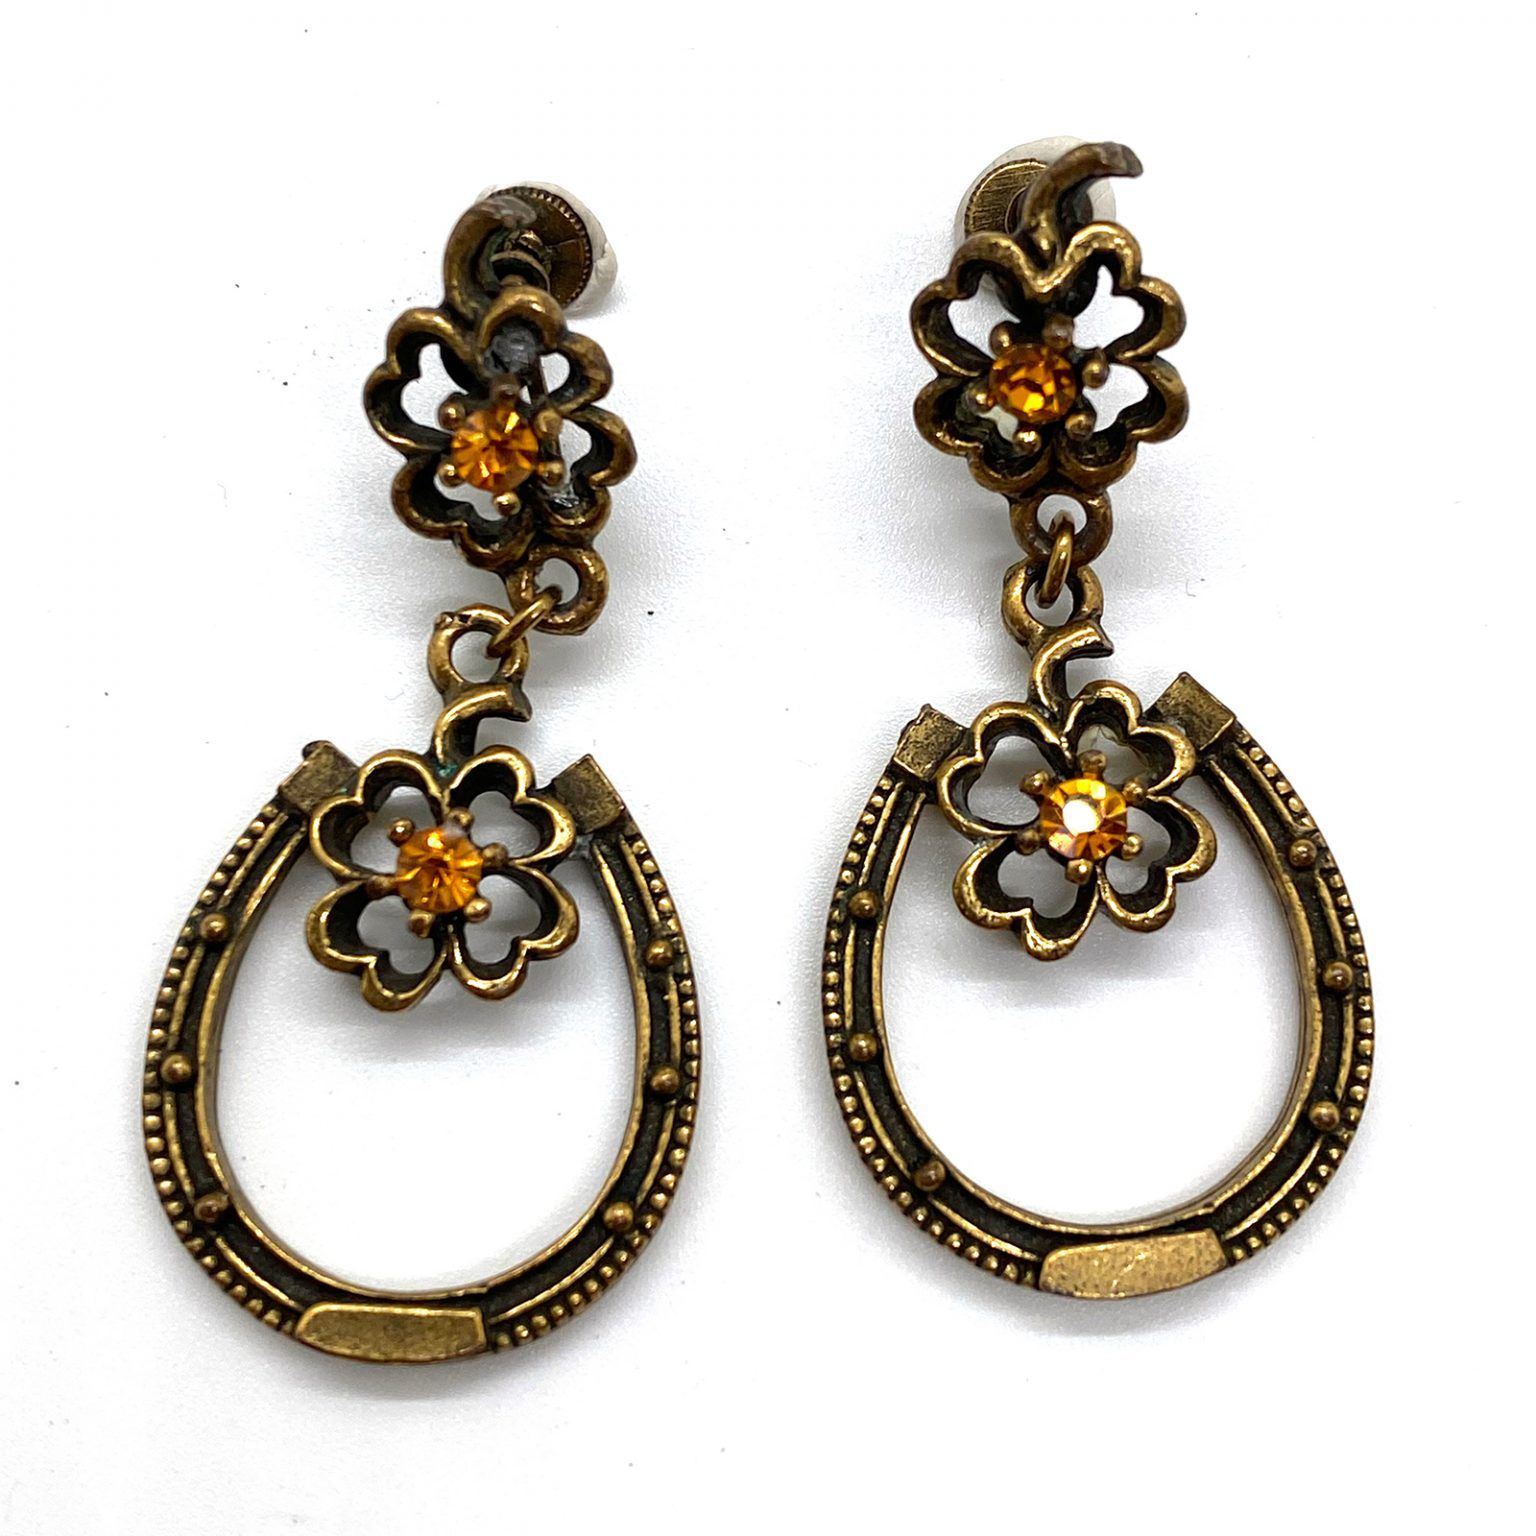 Late 1940s Victorian Revival Horseshoe Screwback Earrings